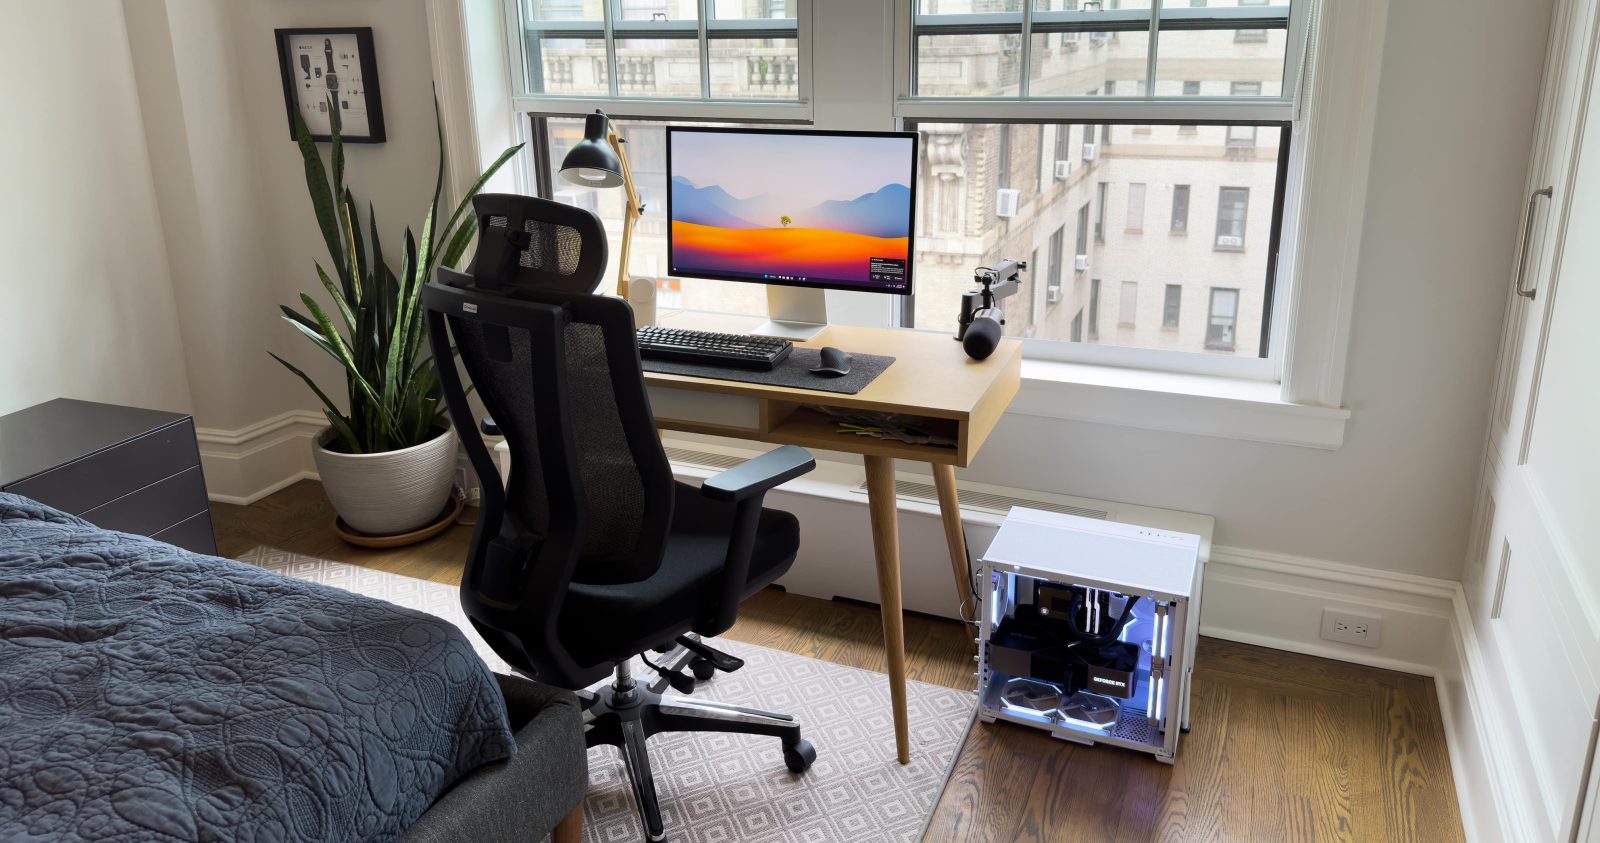 Ian's desk setup with custom rendering PC